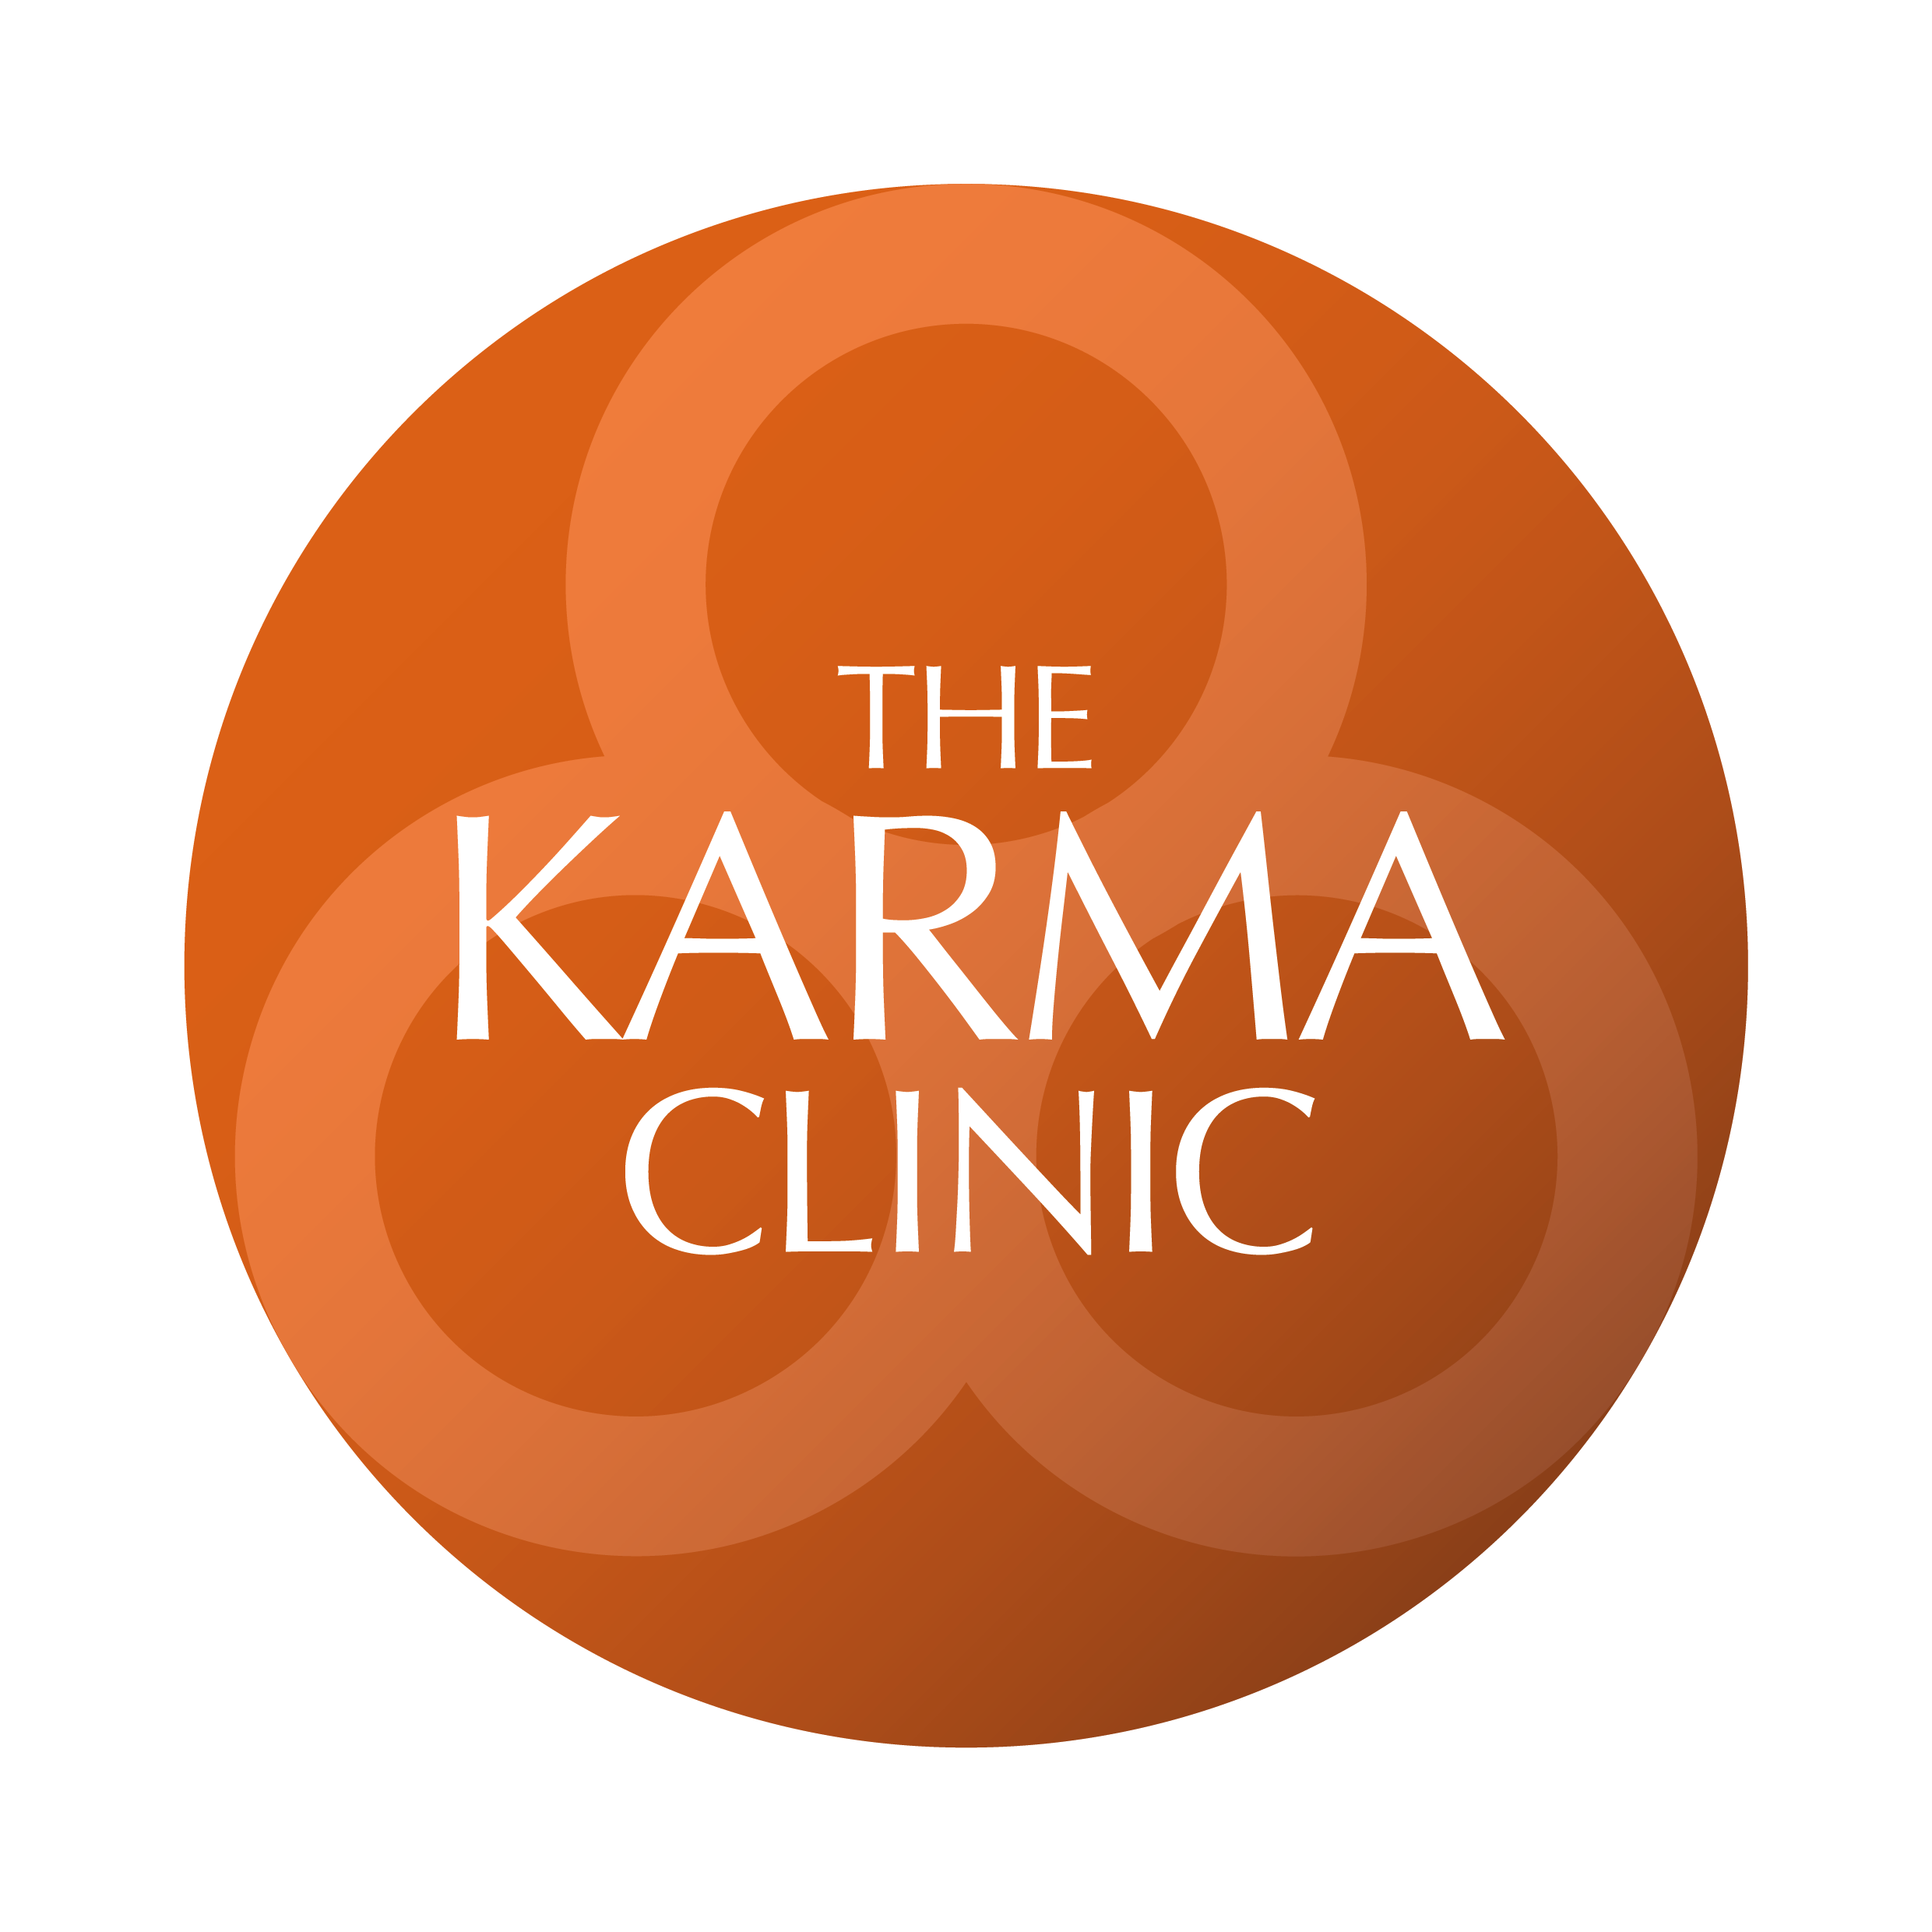 The Karma Clinic